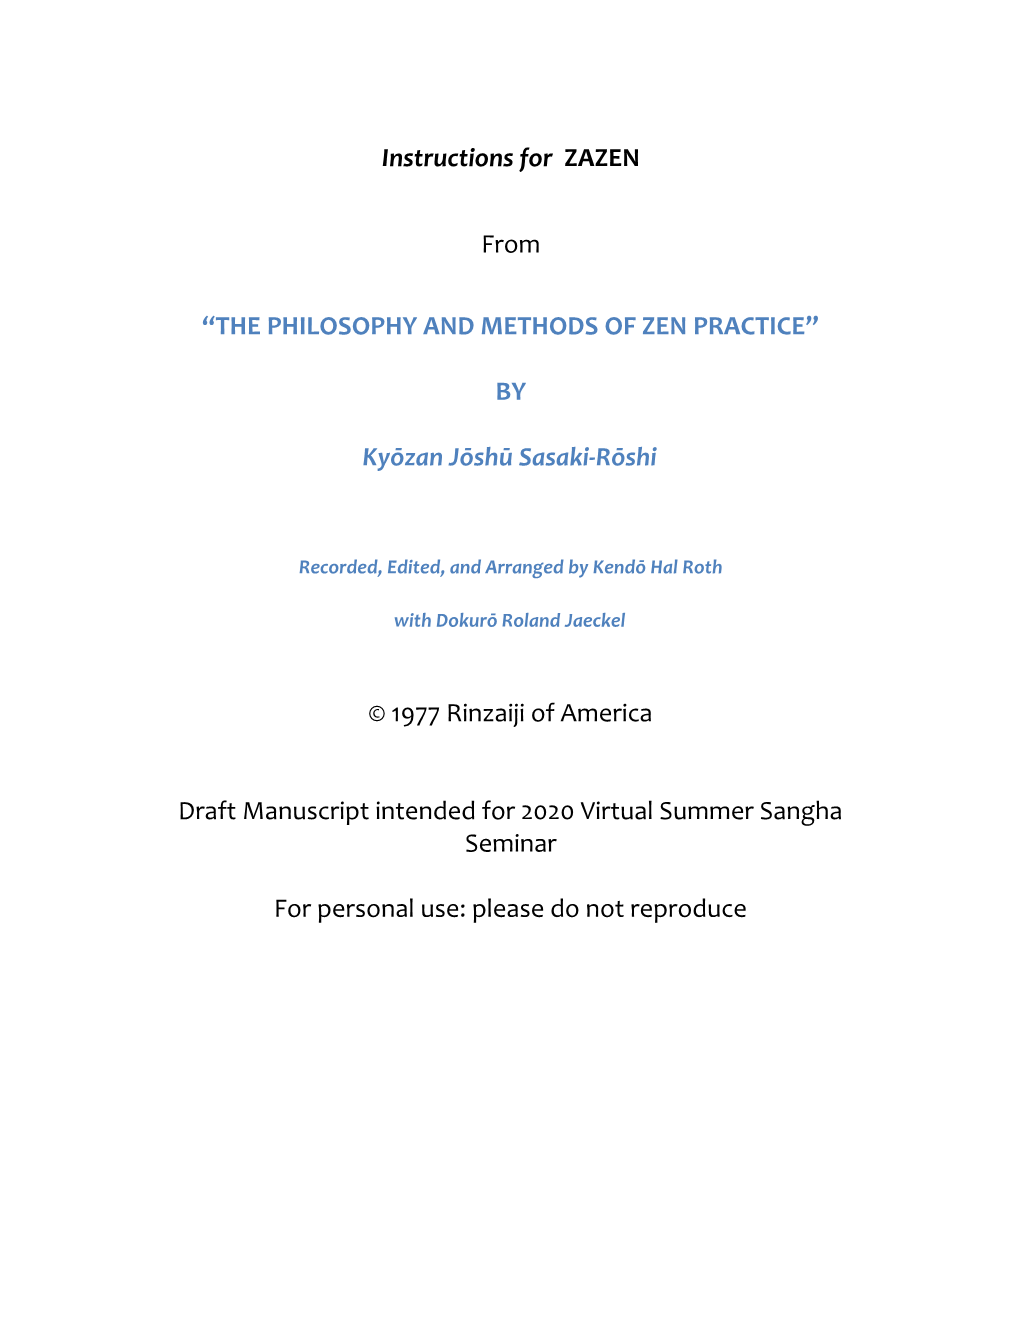 Instructions for ZAZEN from “THE PHILOSOPHY and METHODS of ZEN PRACTICE” by Kyōzan Jōshū Sasaki-Rōshi © 1977 Rinzaiji